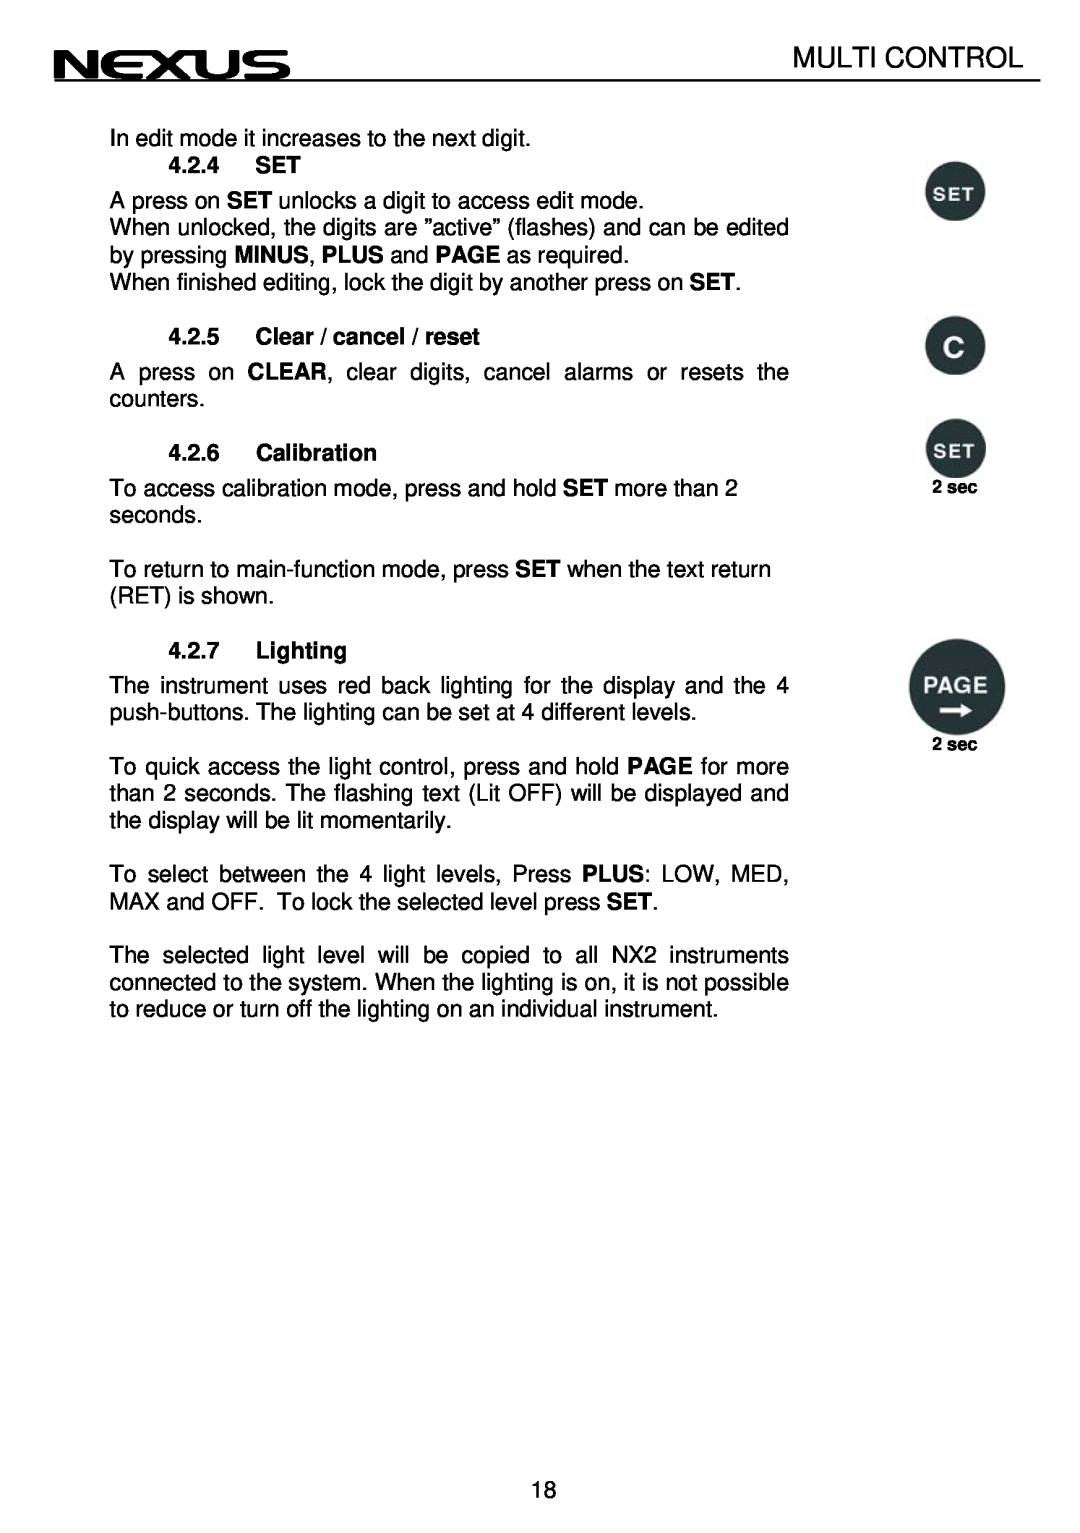 Nexus 21 Multi Control operation manual 4.2.4SET, 4.2.5Clear / cancel / reset, 4.2.6, Calibration, 4.2.7, Lighting 